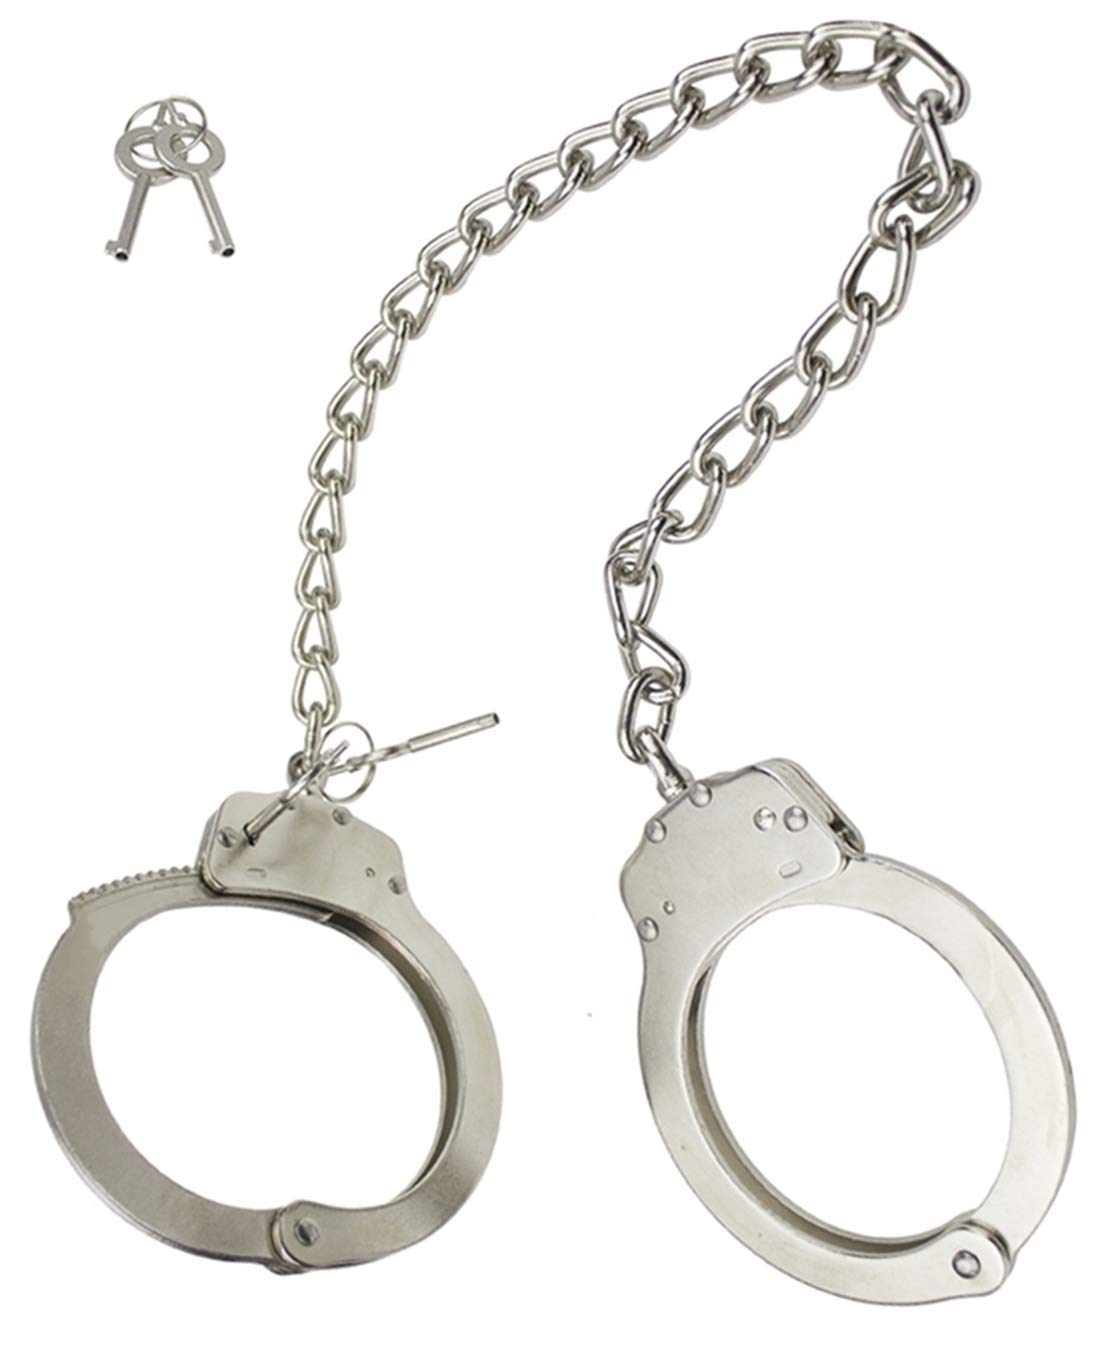 Stainless Steel Foot Ankle Cuffs Handcuffs Restraint Heavy Duty